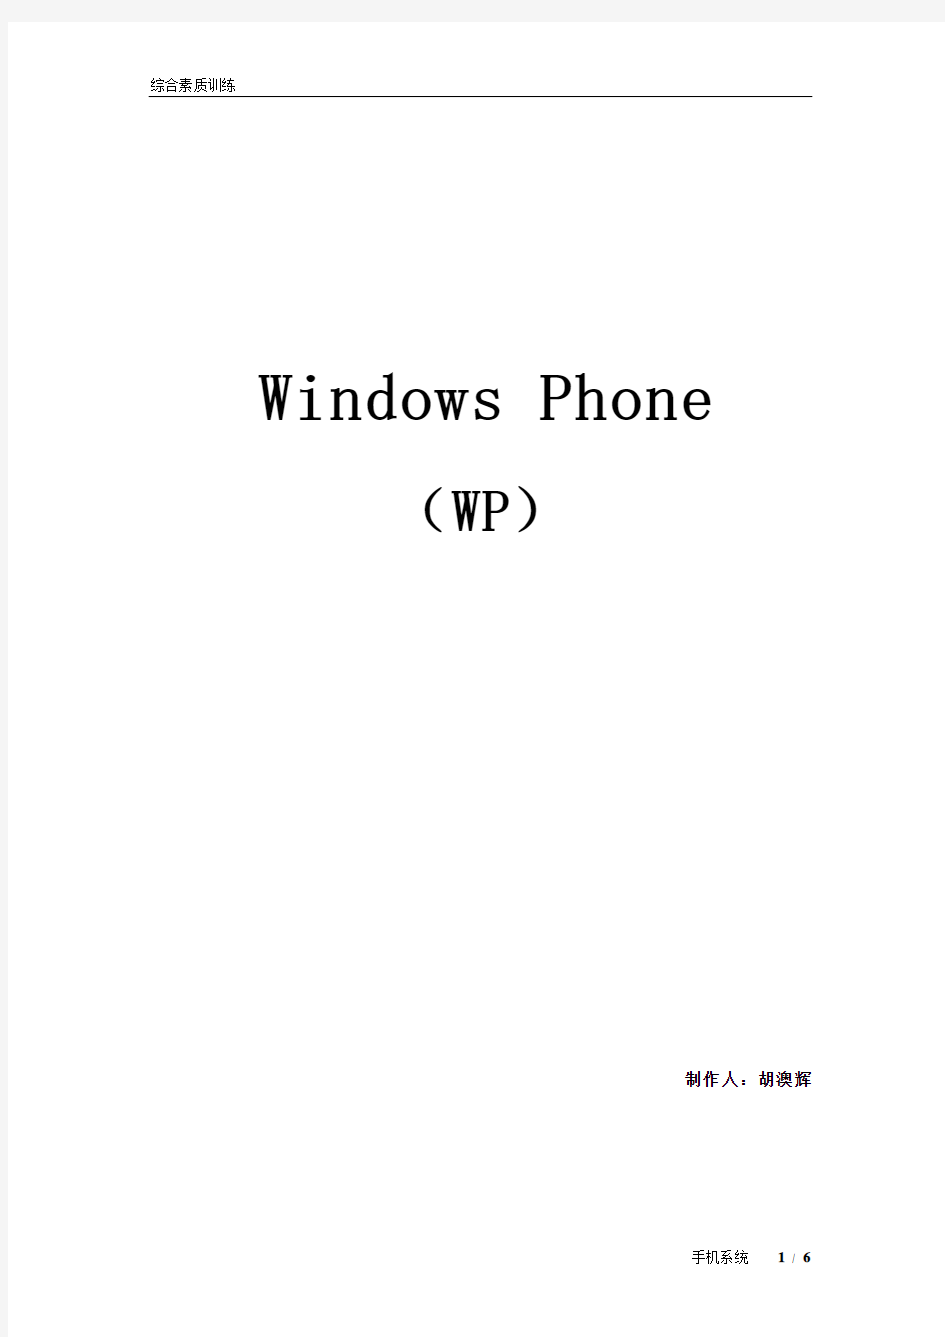 Windows phone系统简介